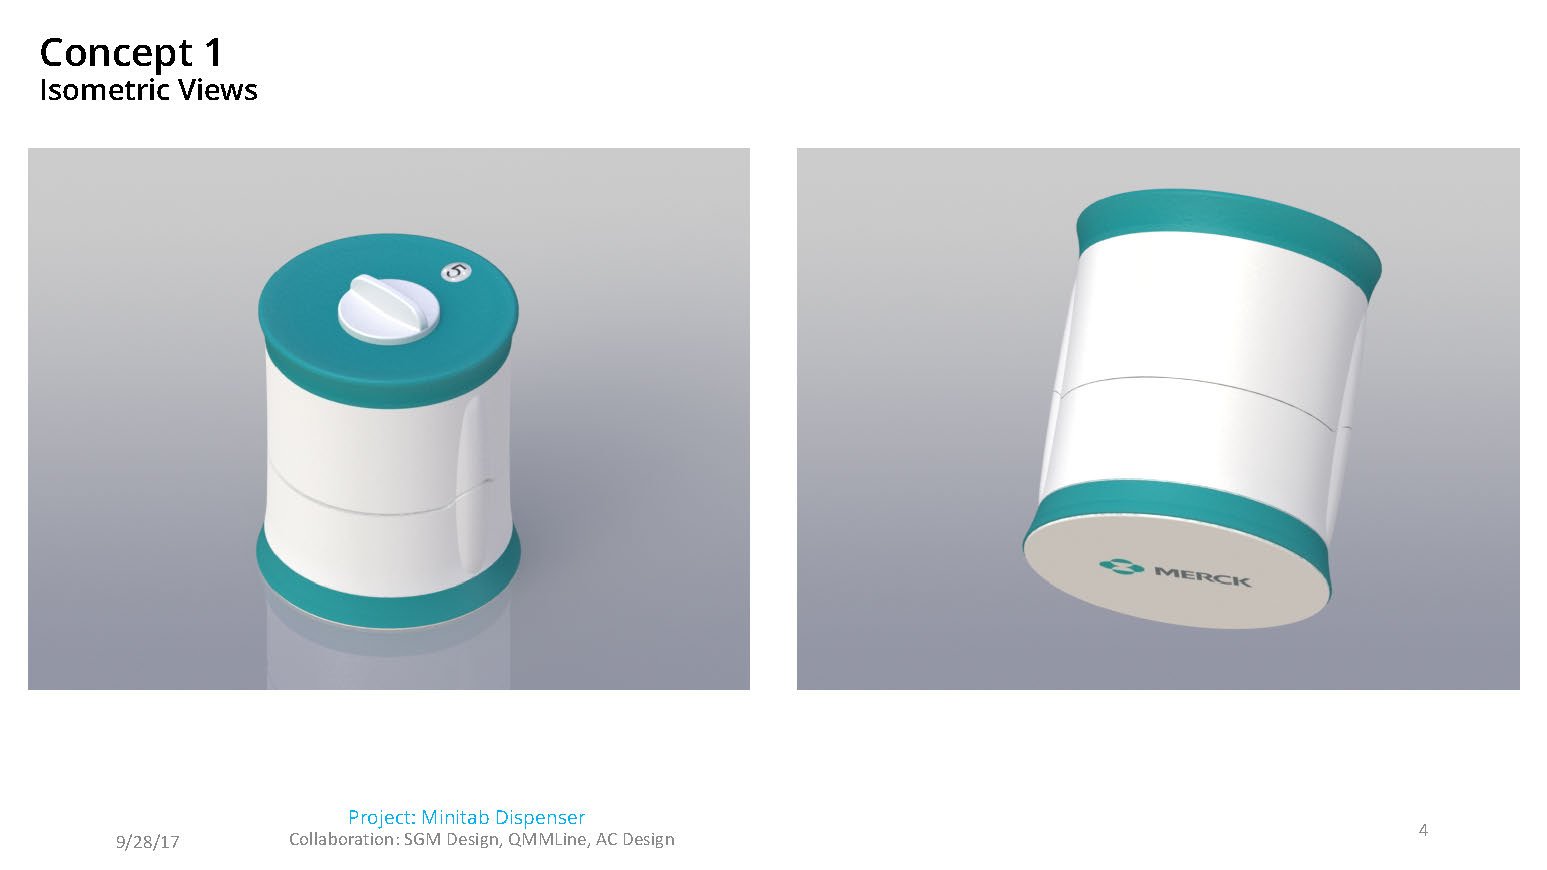 Minitab Dispenser Merck - Concept 1-5.REV_Page_04.jpg